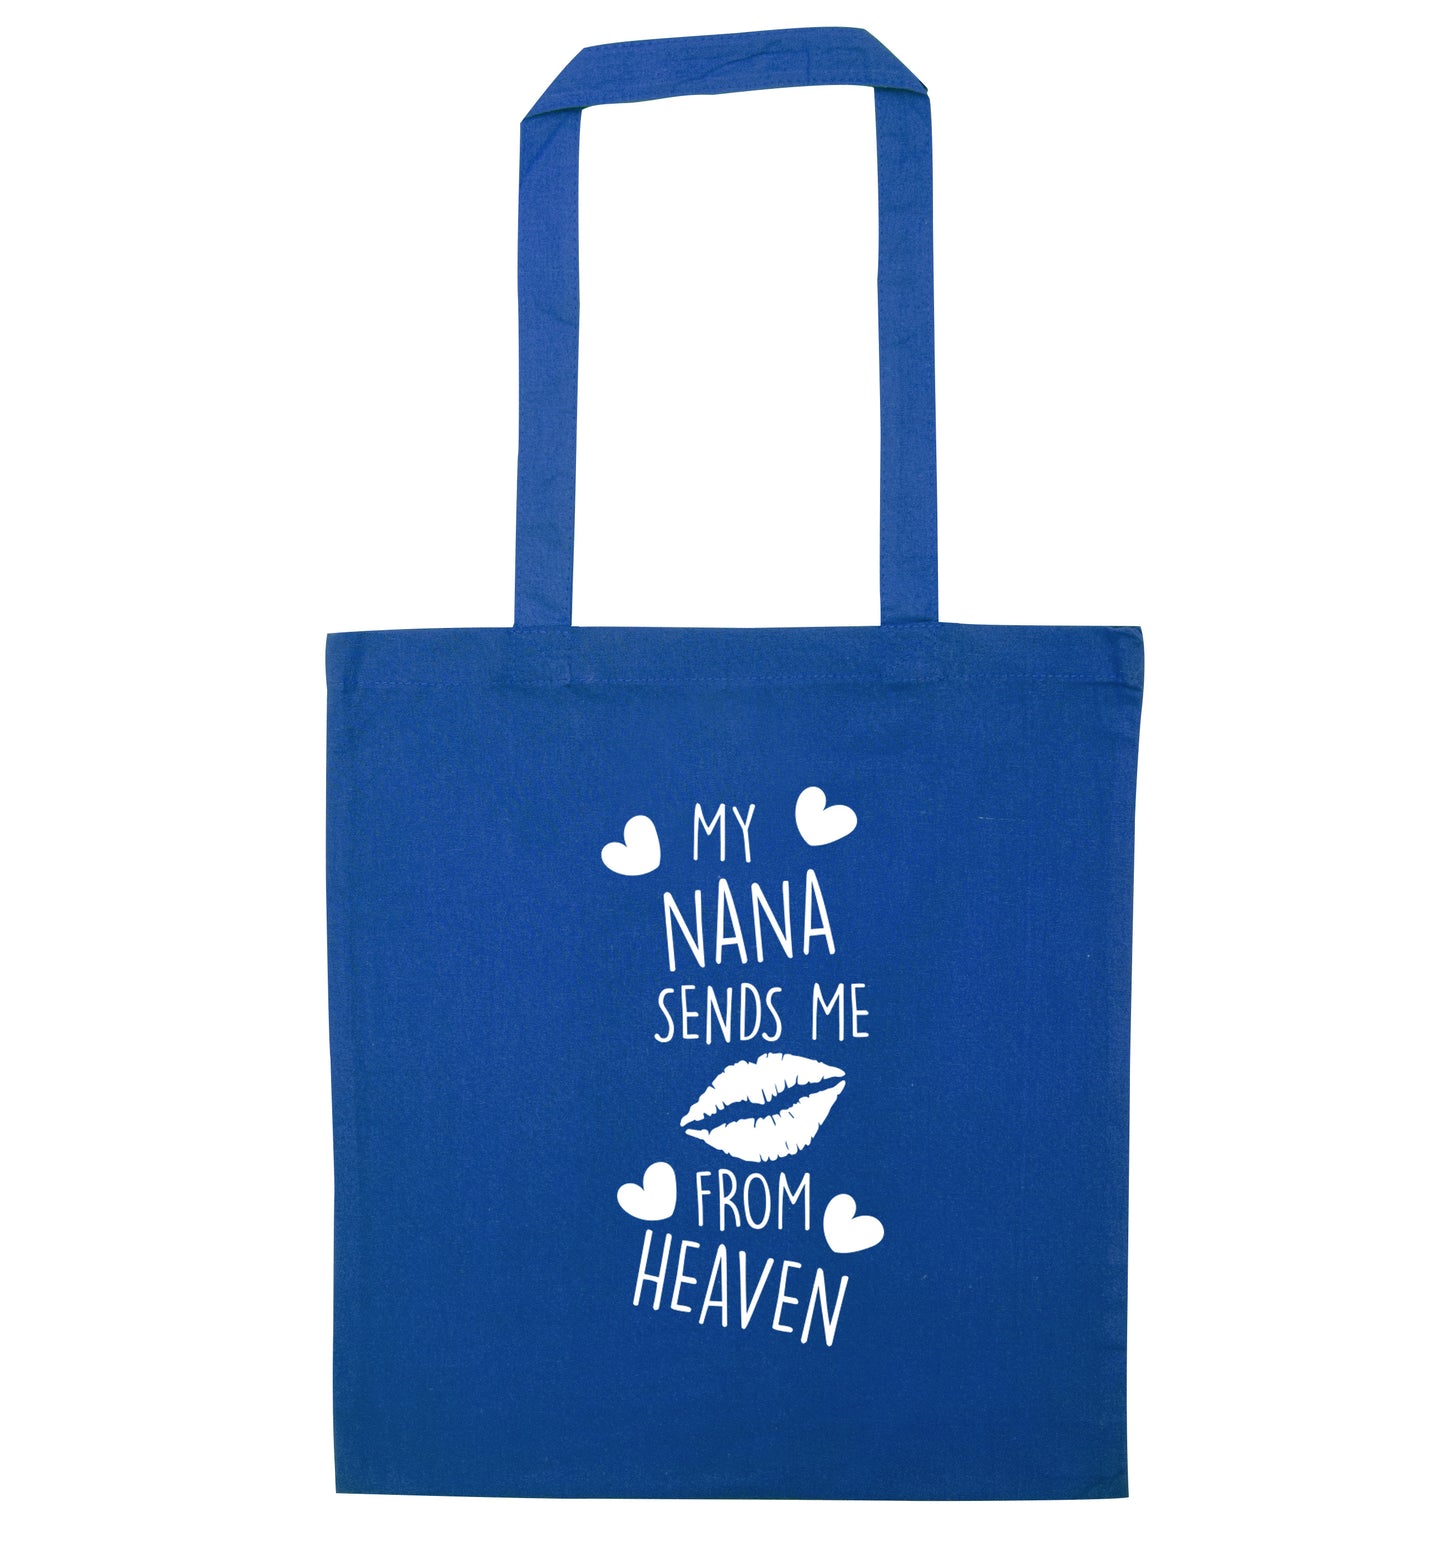 My nana sends me kisses from heaven blue tote bag